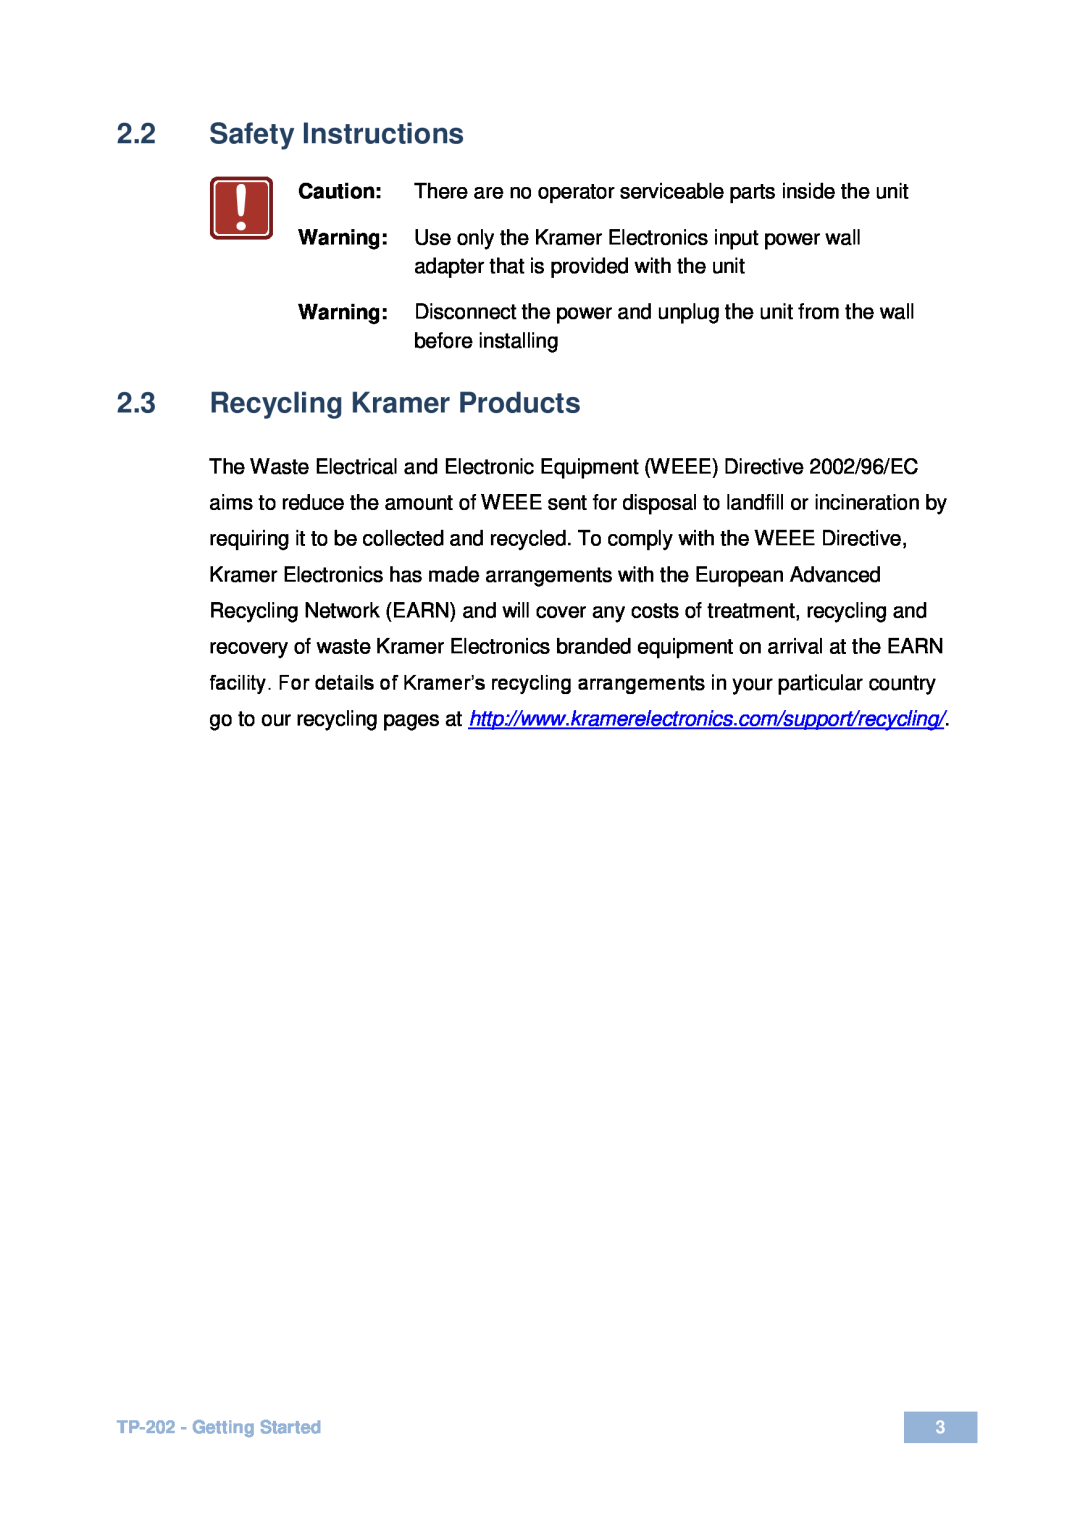 Kramer Electronics TP-202 user manual 2.2Safety Instructions, 2.3Recycling Kramer Products 